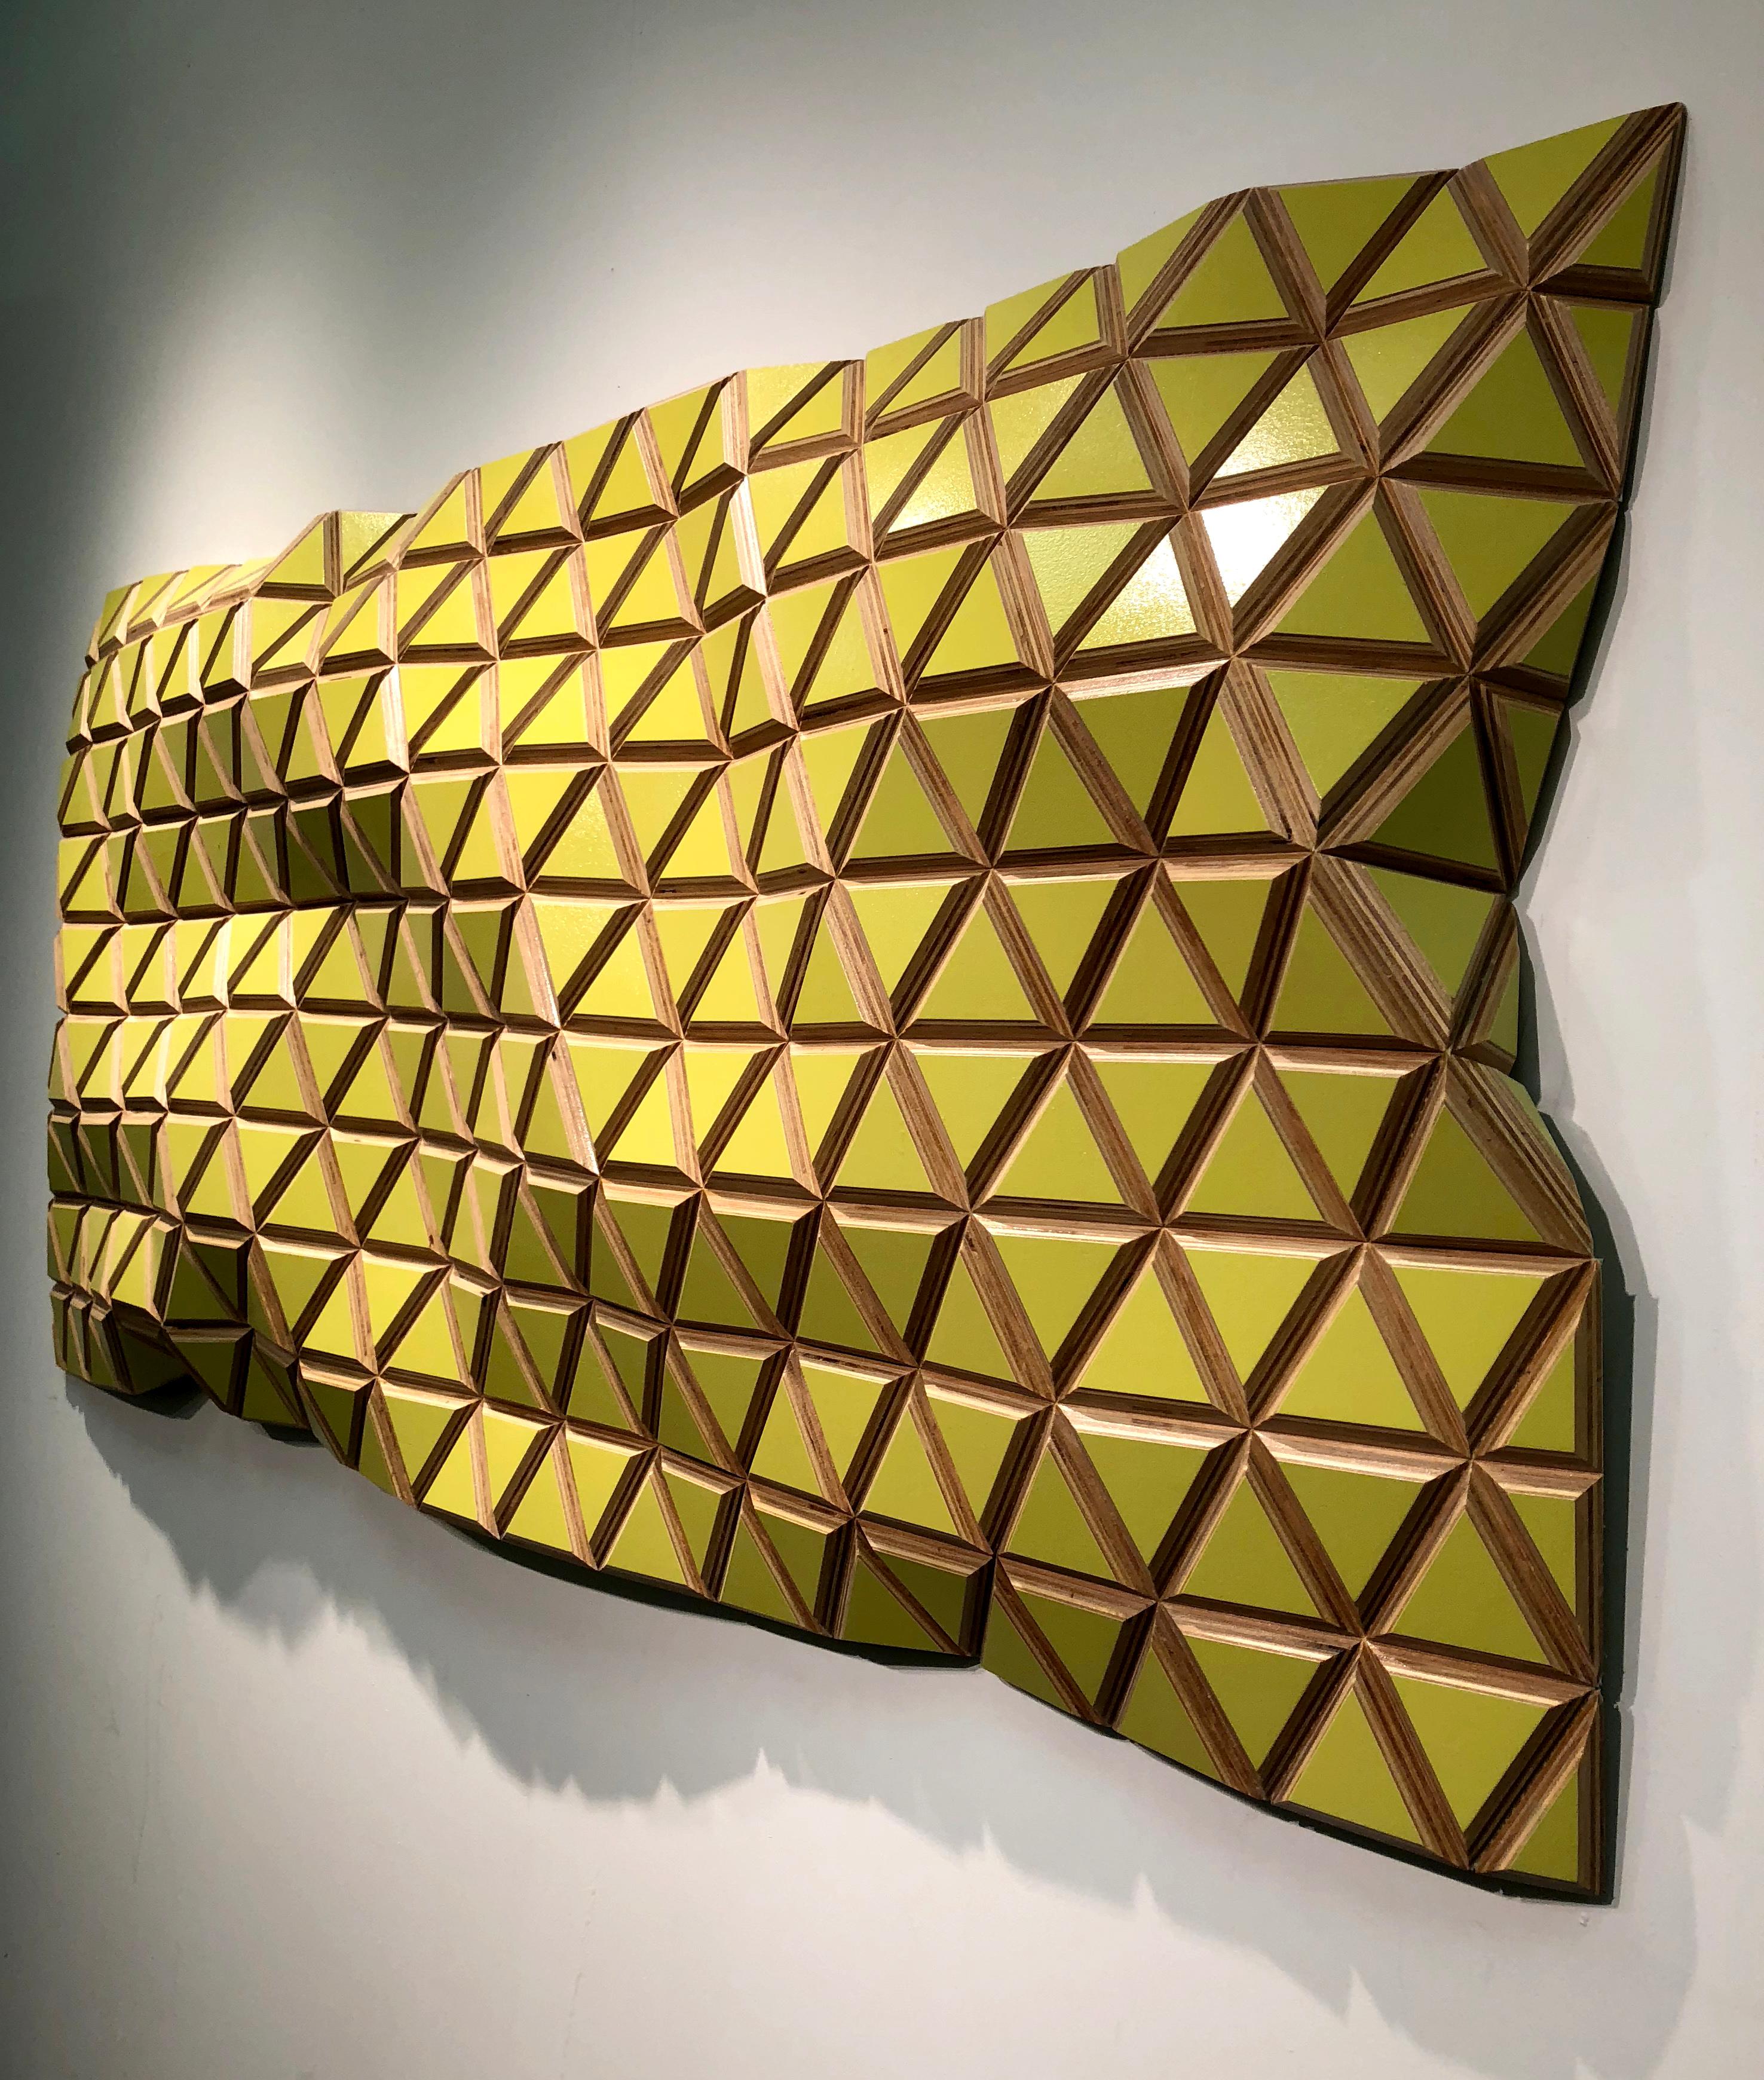 Brimstone Yellows I  - Flexible Rigids - sculptural wall, parametric design  - New Media Art by Hugo Garcia-Urrutia